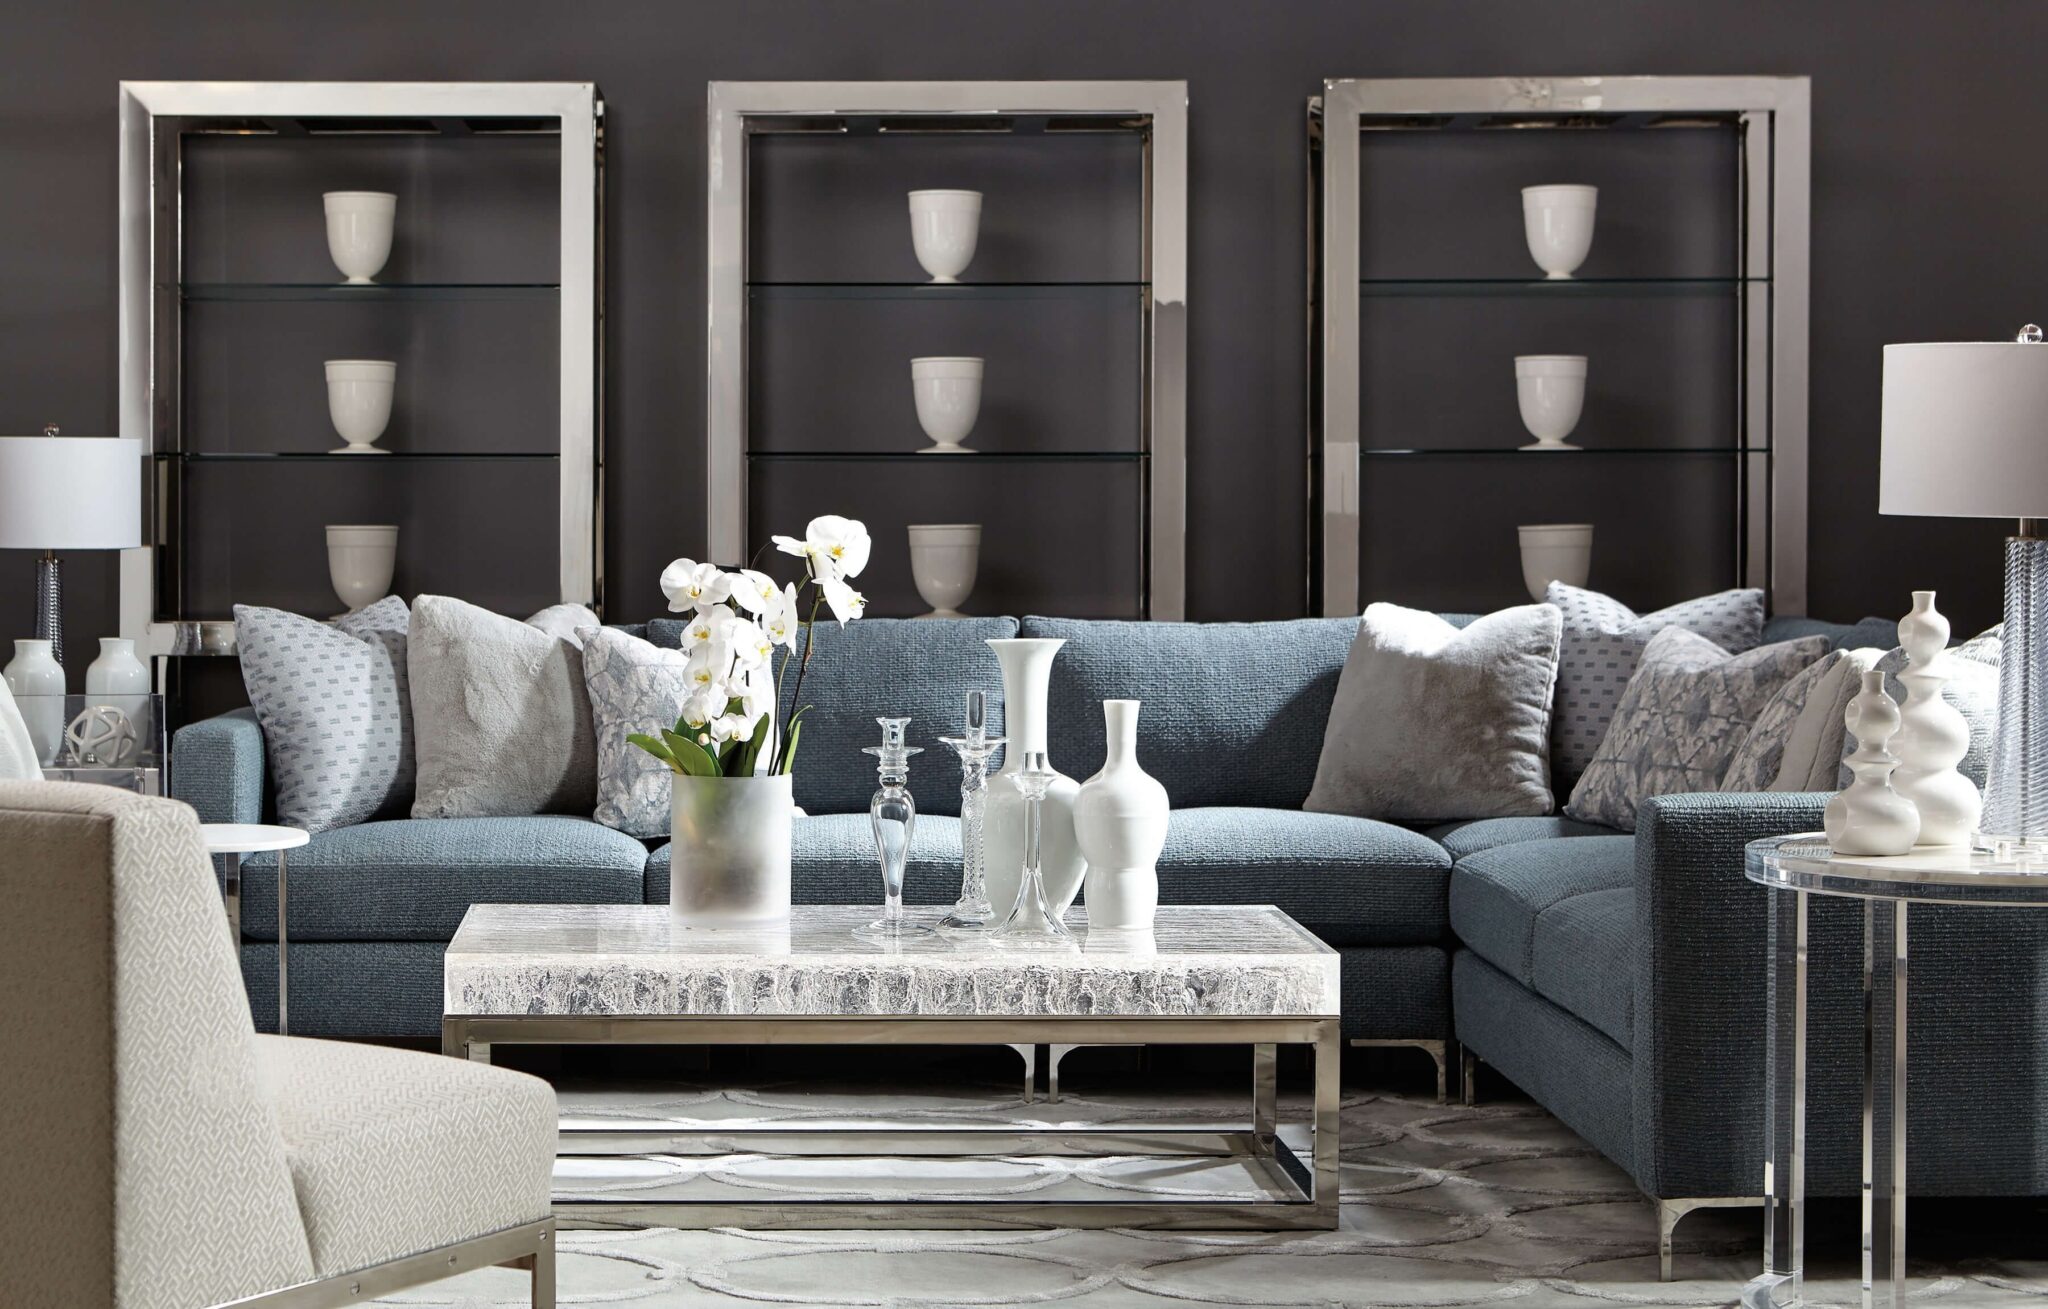 Does Interior Design Include Furniture?